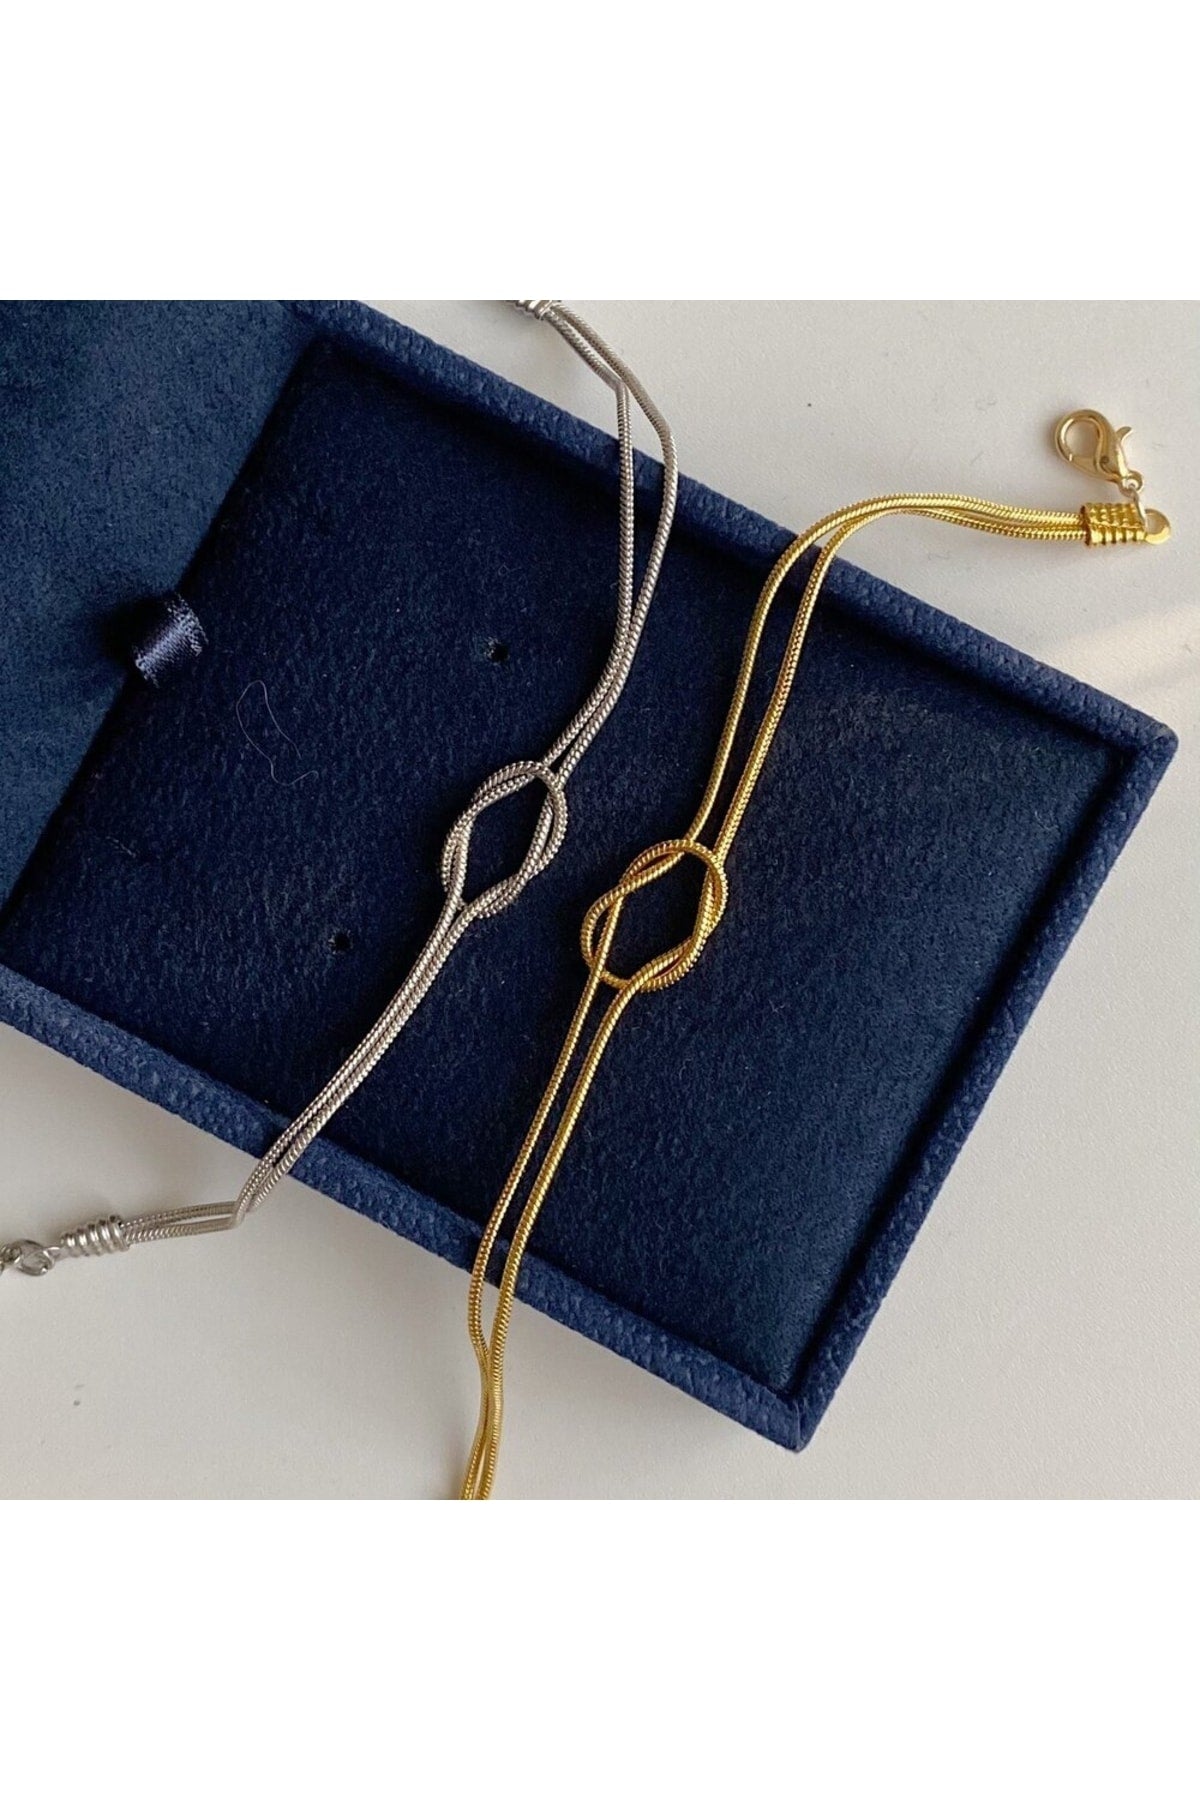 Knot Pattern Couple-friendship Bracelet Gold- Gold Color